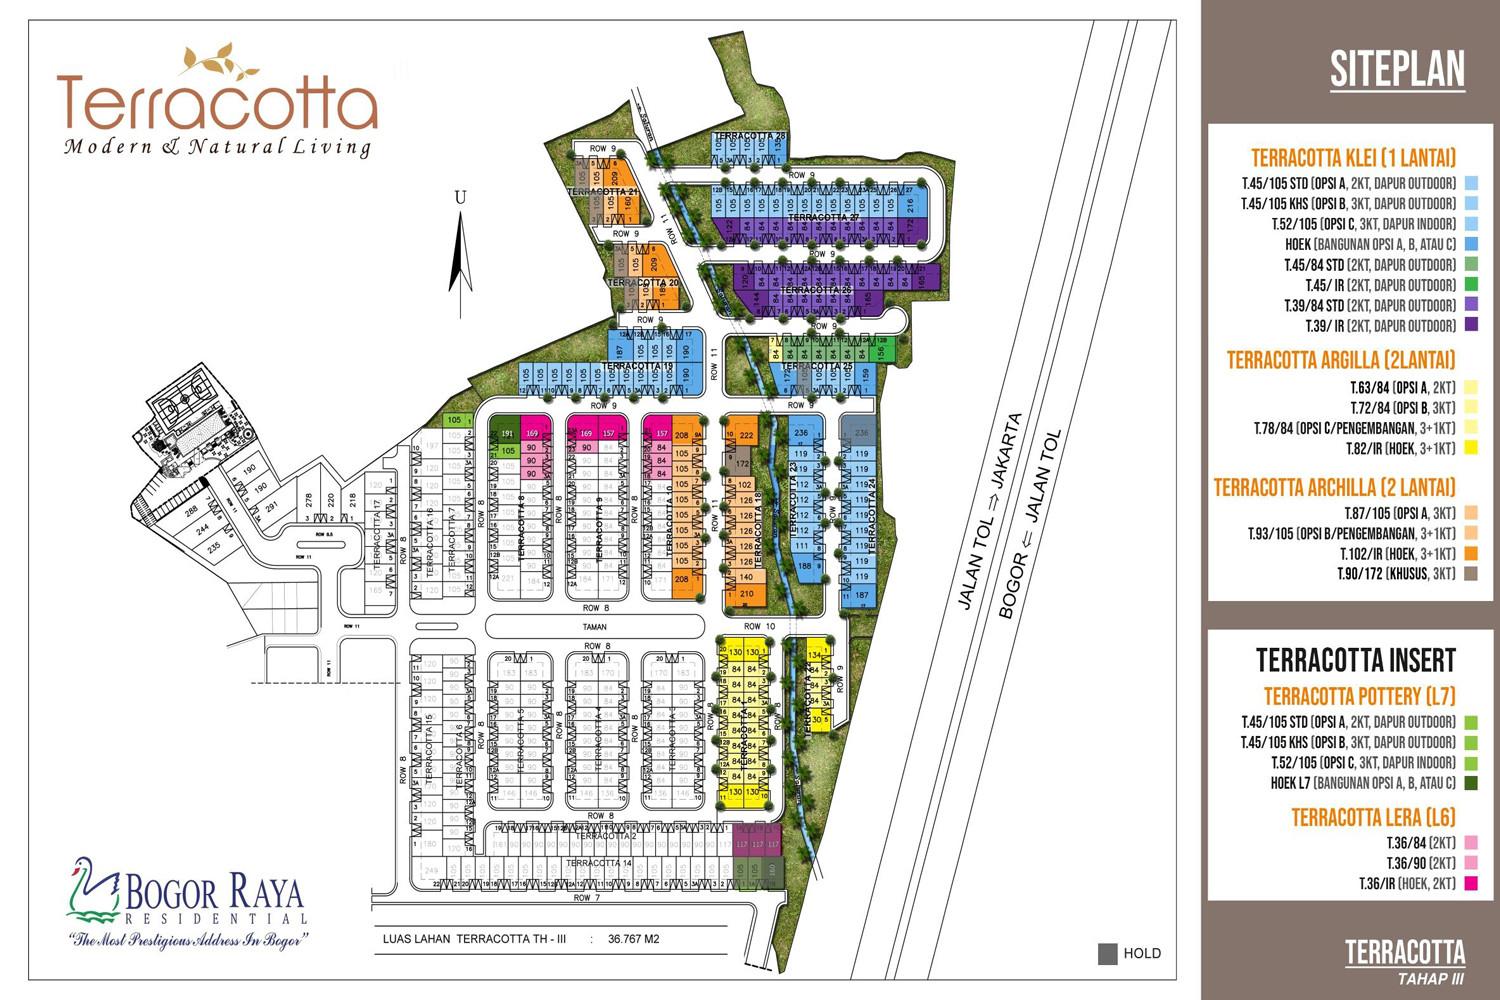 Siteplan Terracotta Bogor Raya Residence